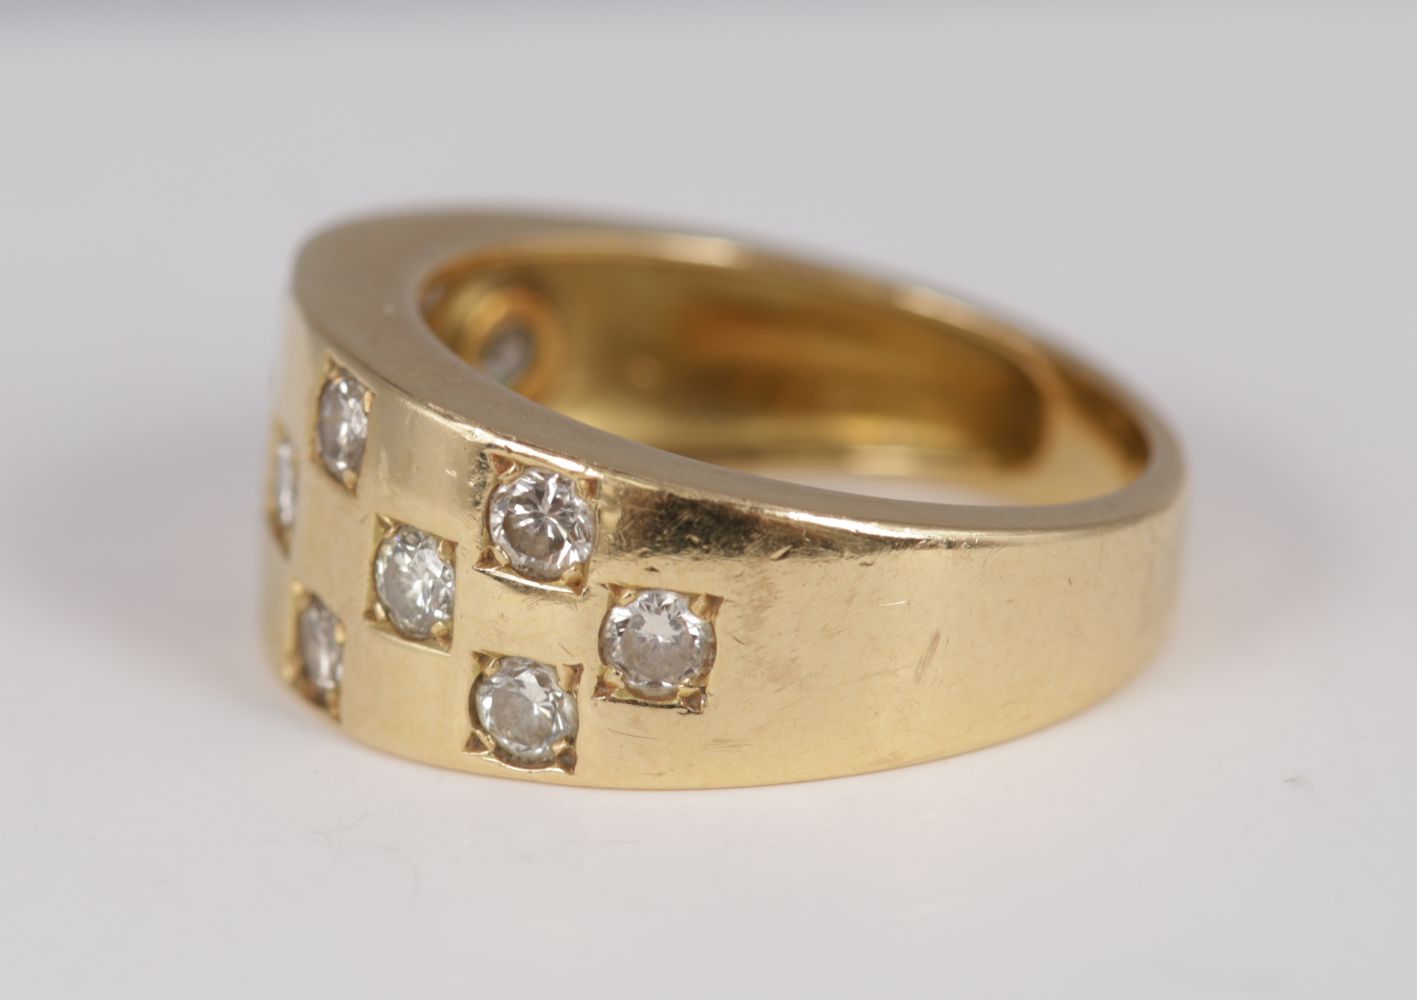 18K GOLD AND DIAMOND WEDDING BAND RING - Image 2 of 3